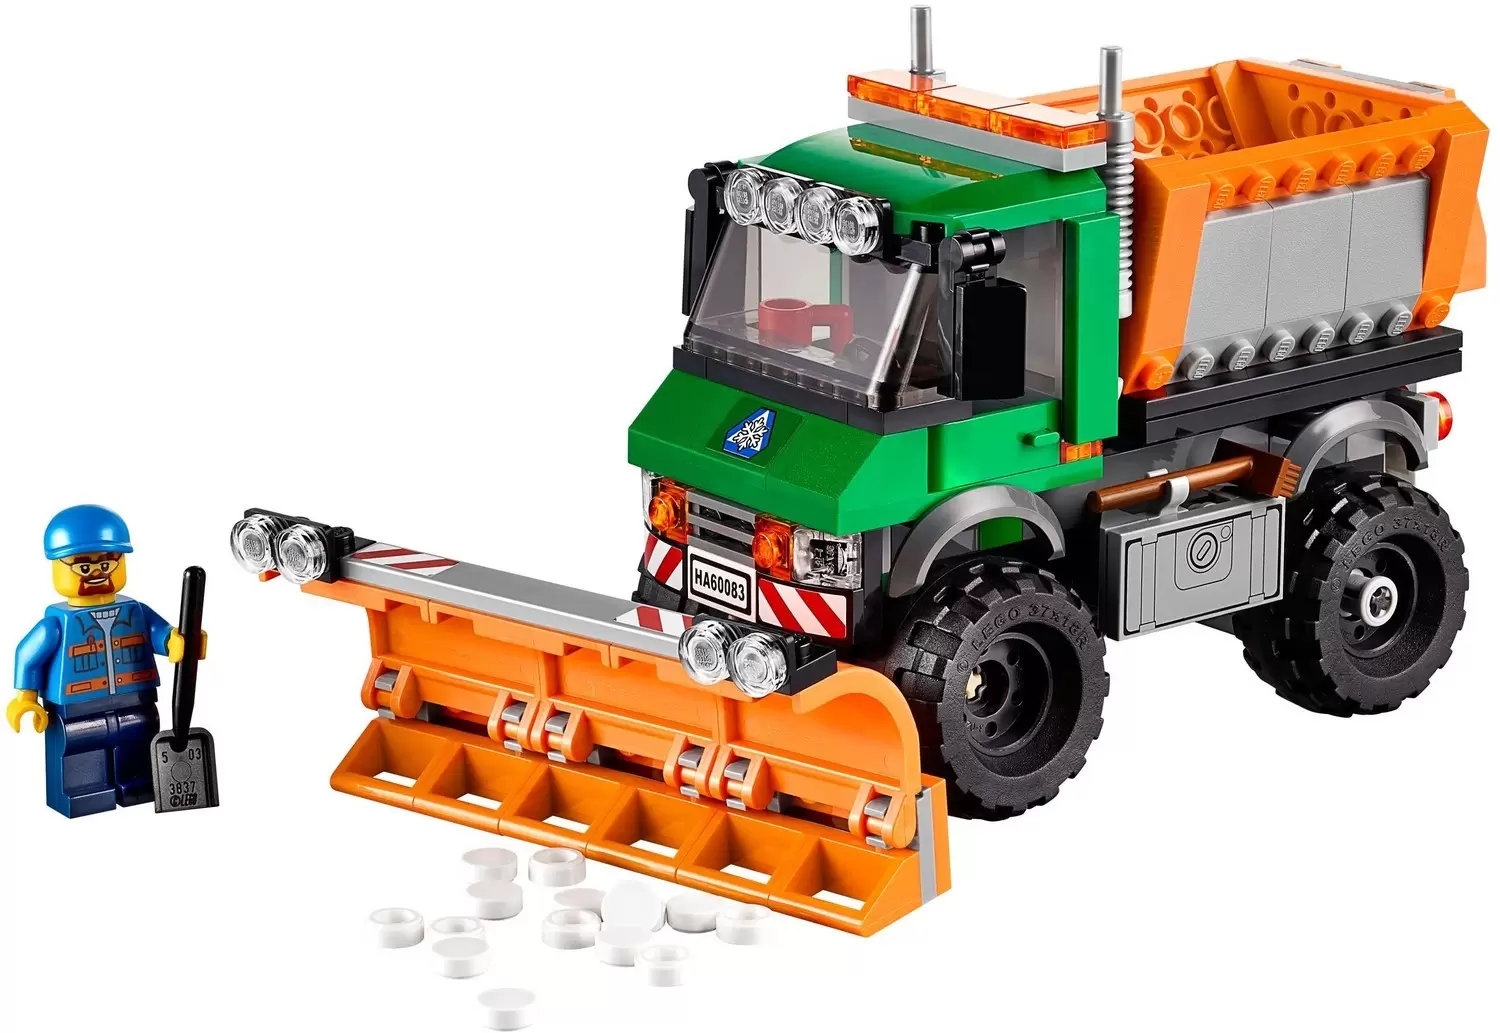 LEGO CITY - Snowplough Truck